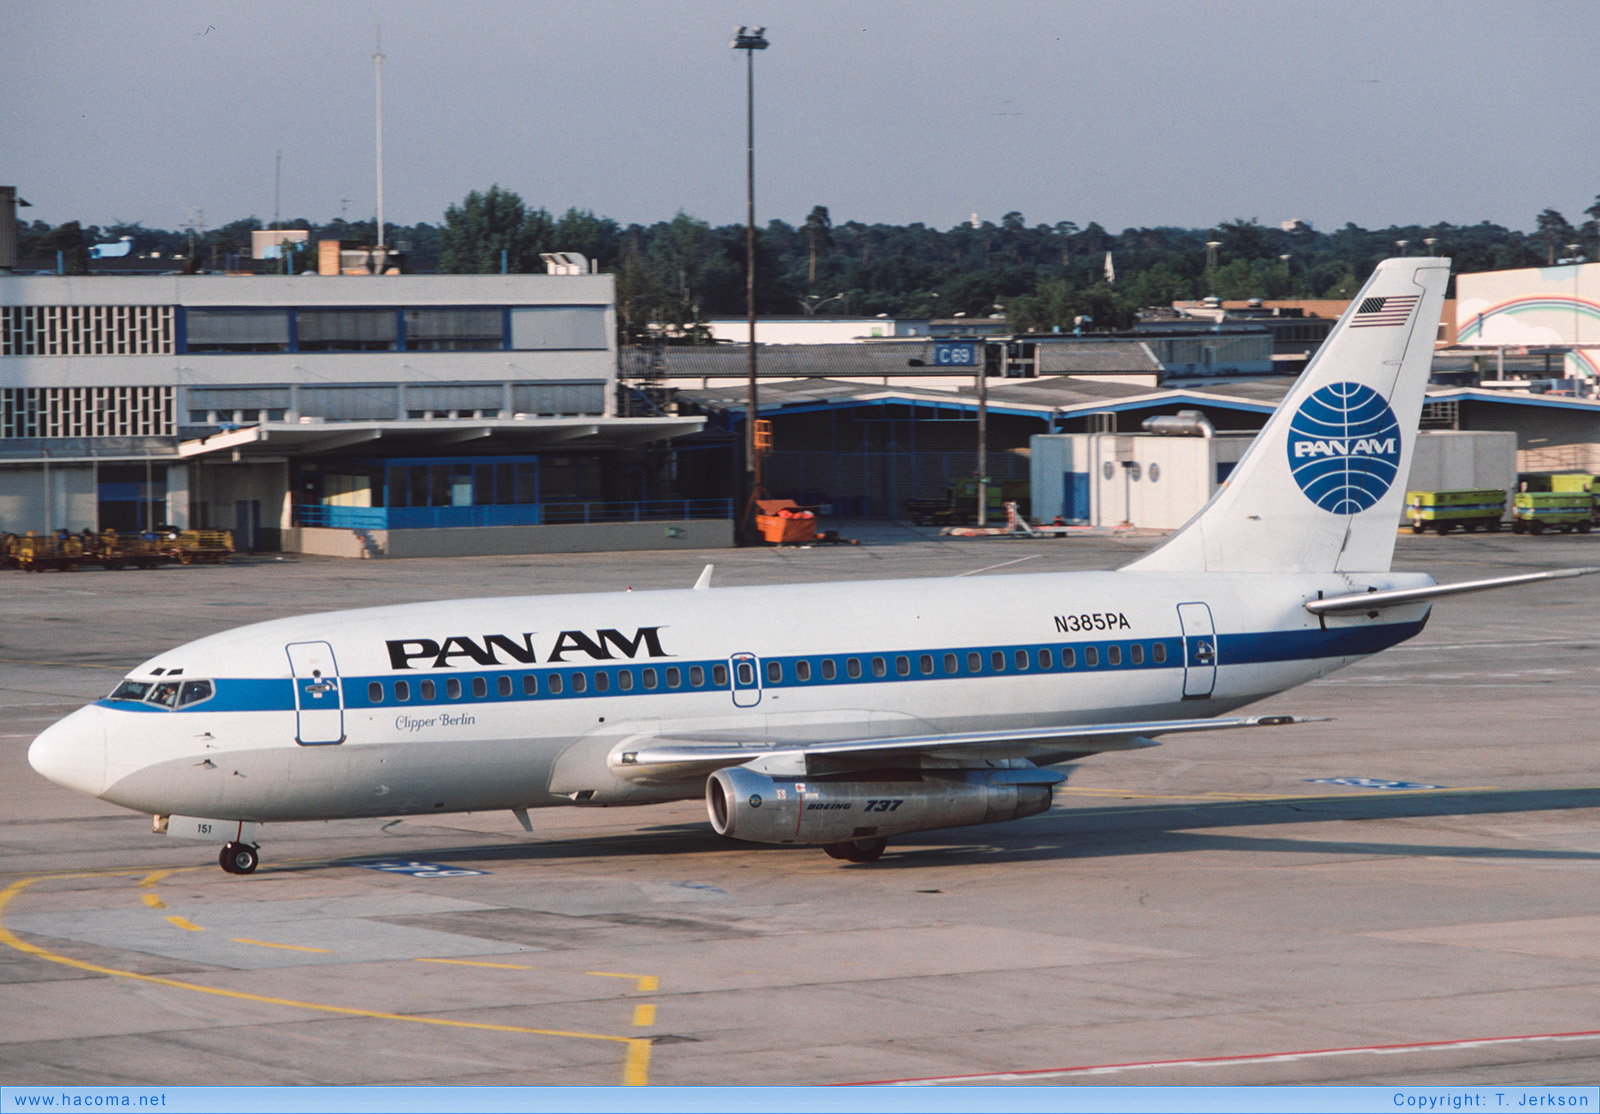 Photo of N385PA - Pan Am Clipper Berlin - Frankfurt International Airport - 1985